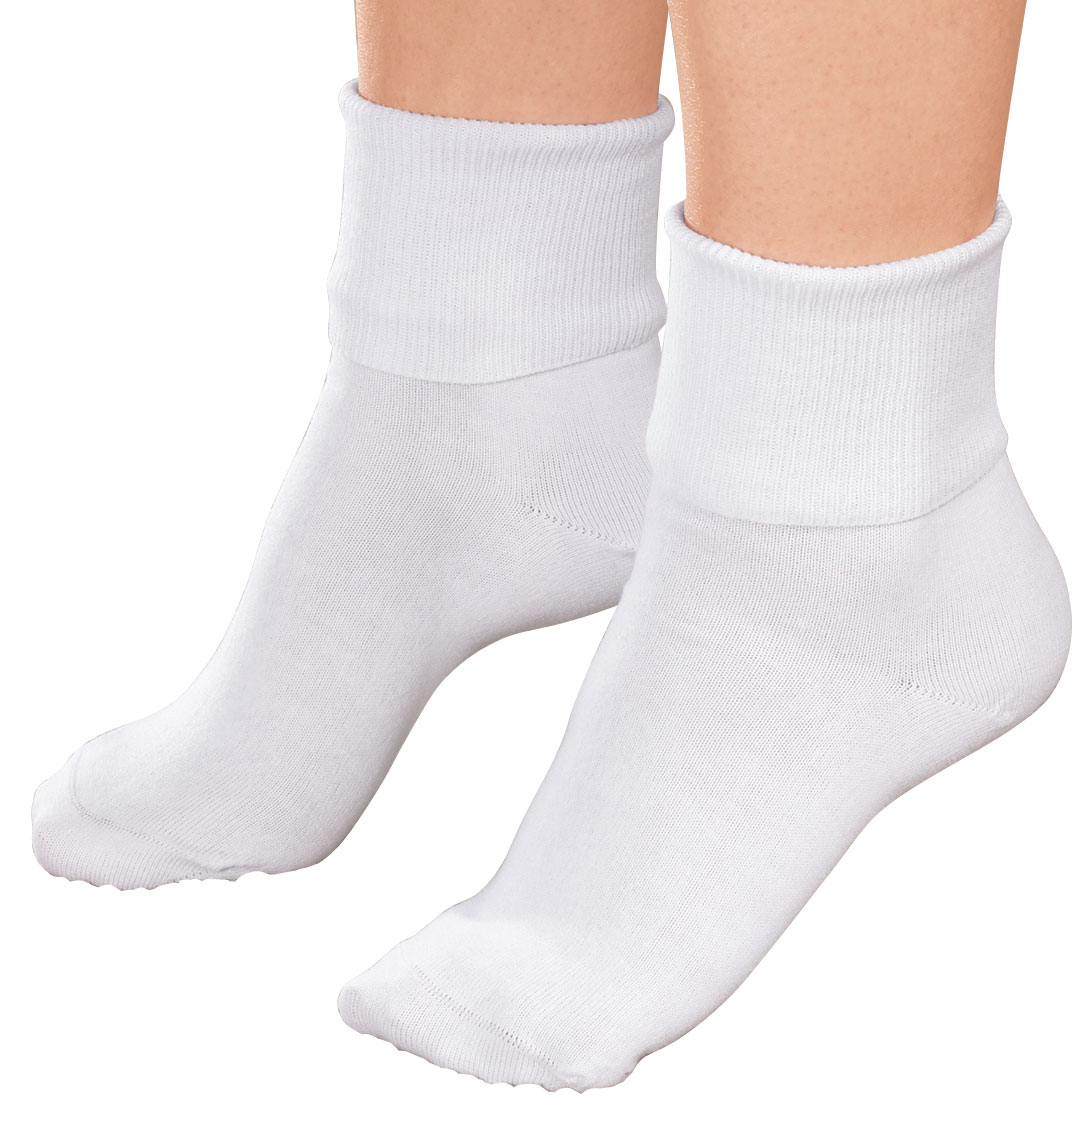 Prime Life Fibers - Buster Brown Women's 100% Cotton Socks - 3 Pair